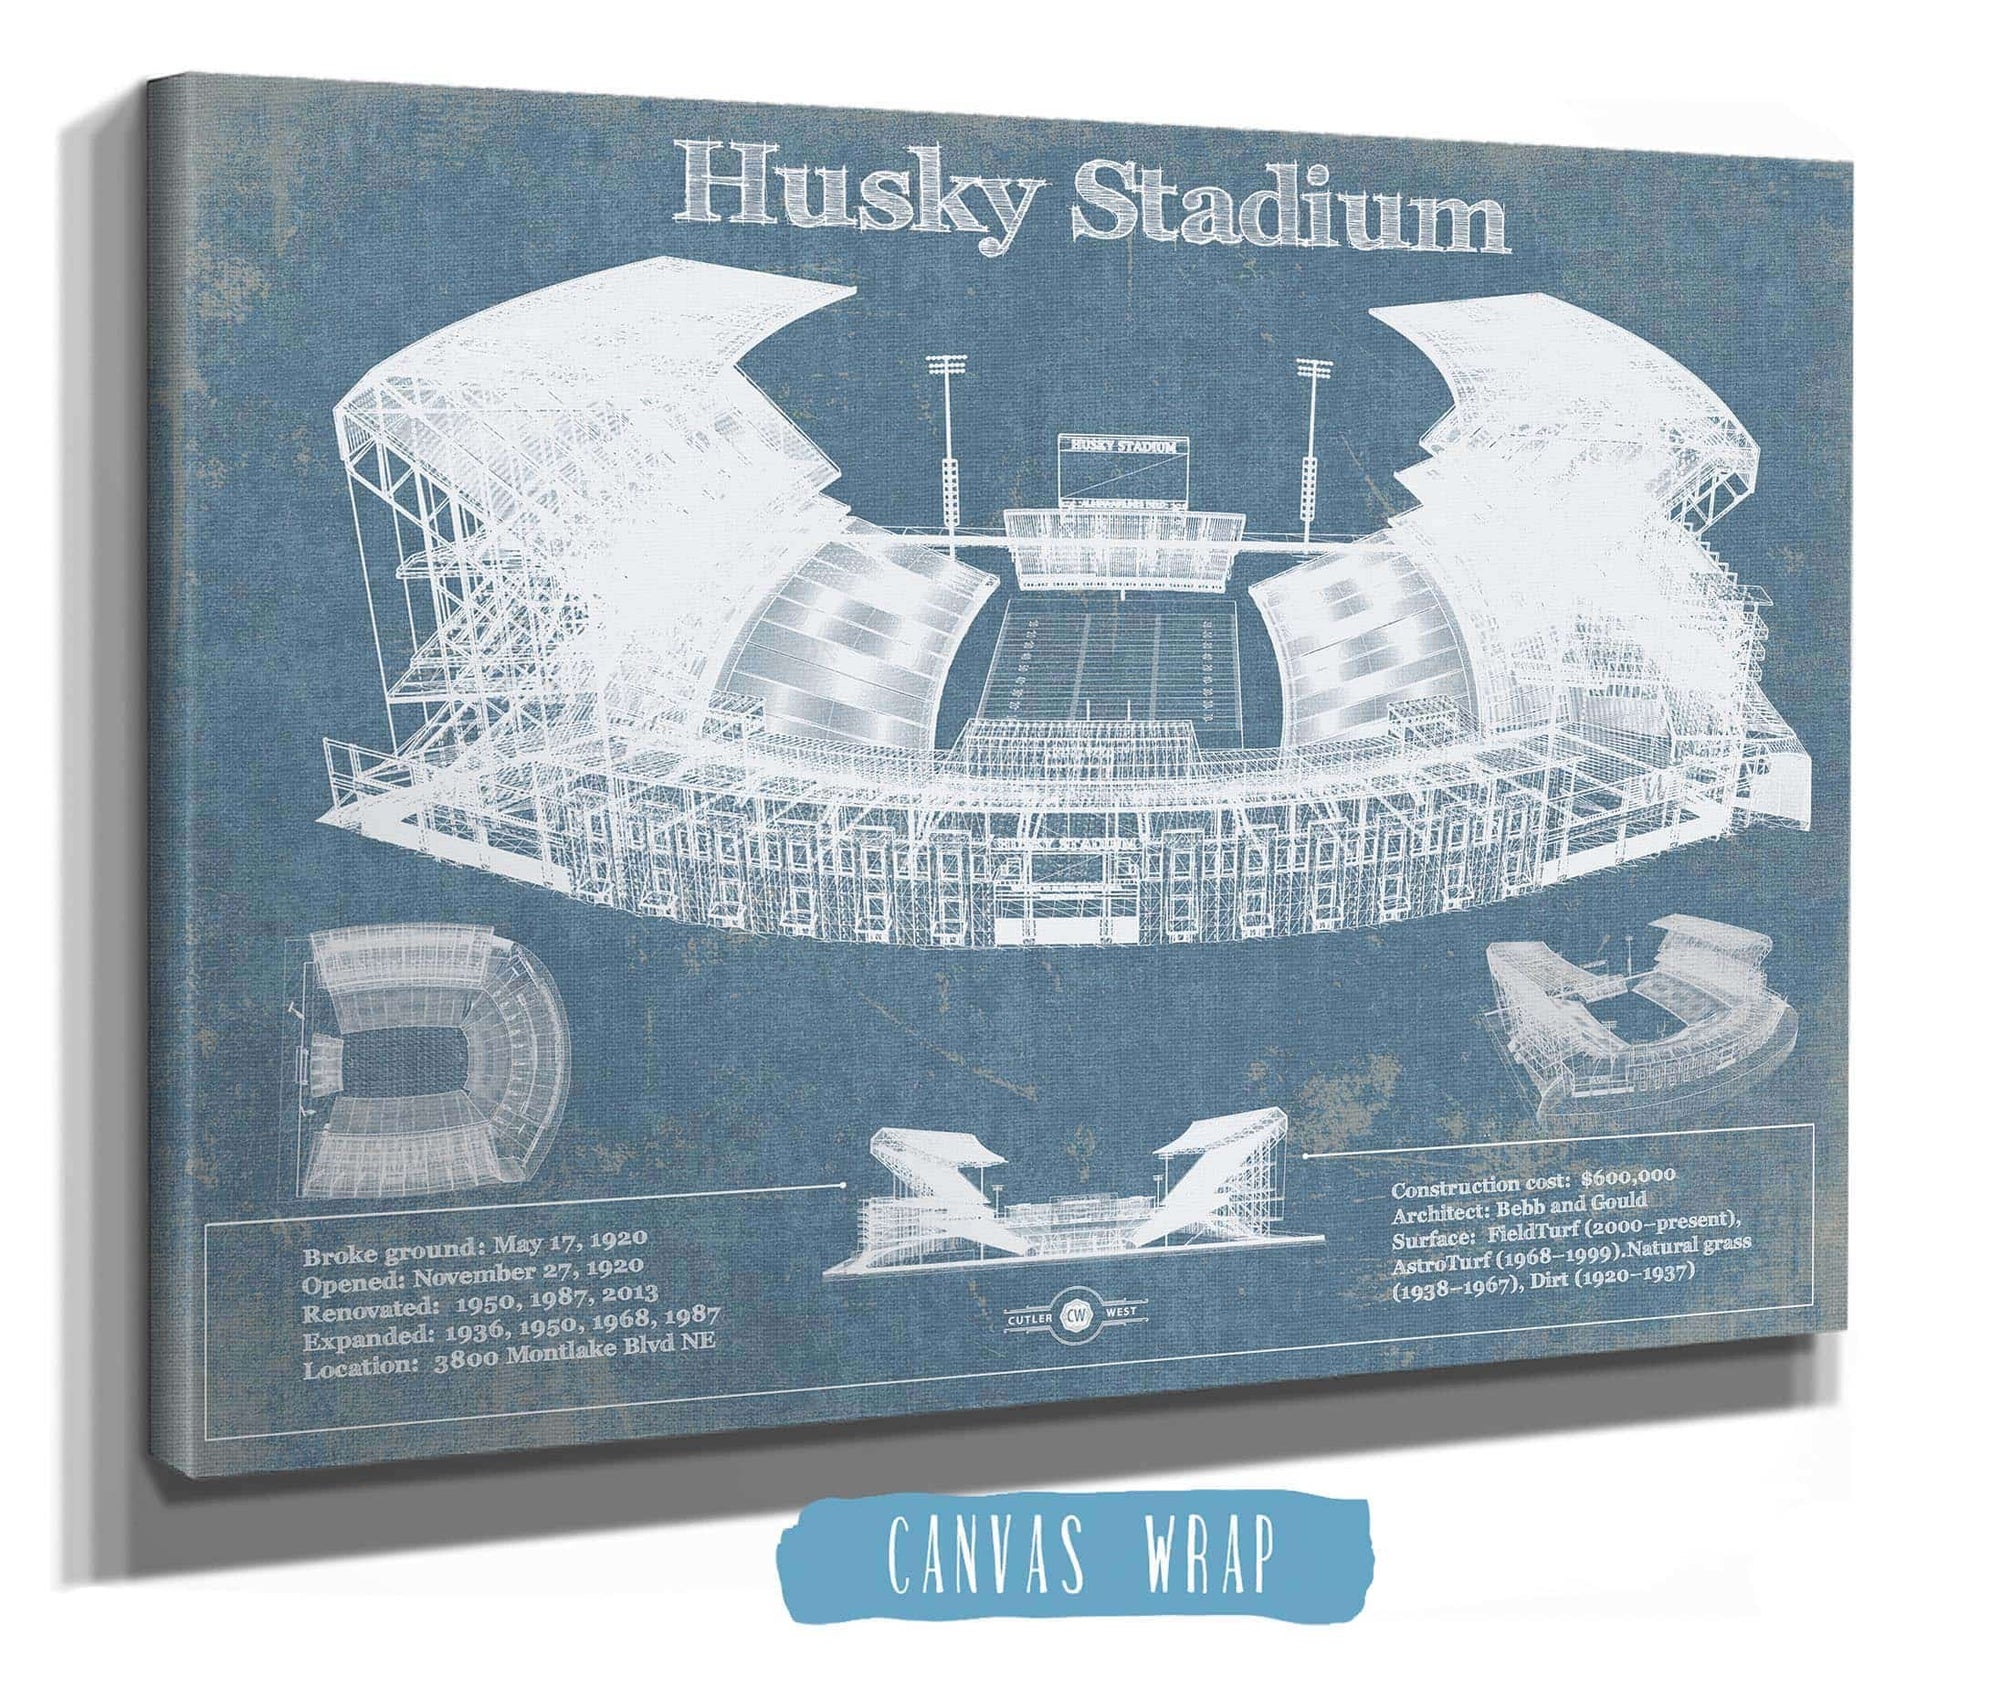 Cutler West College Football Collection Washington Huskies Art Blue Version - Husky Stadium Vintage Stadium Blueprint Art Print